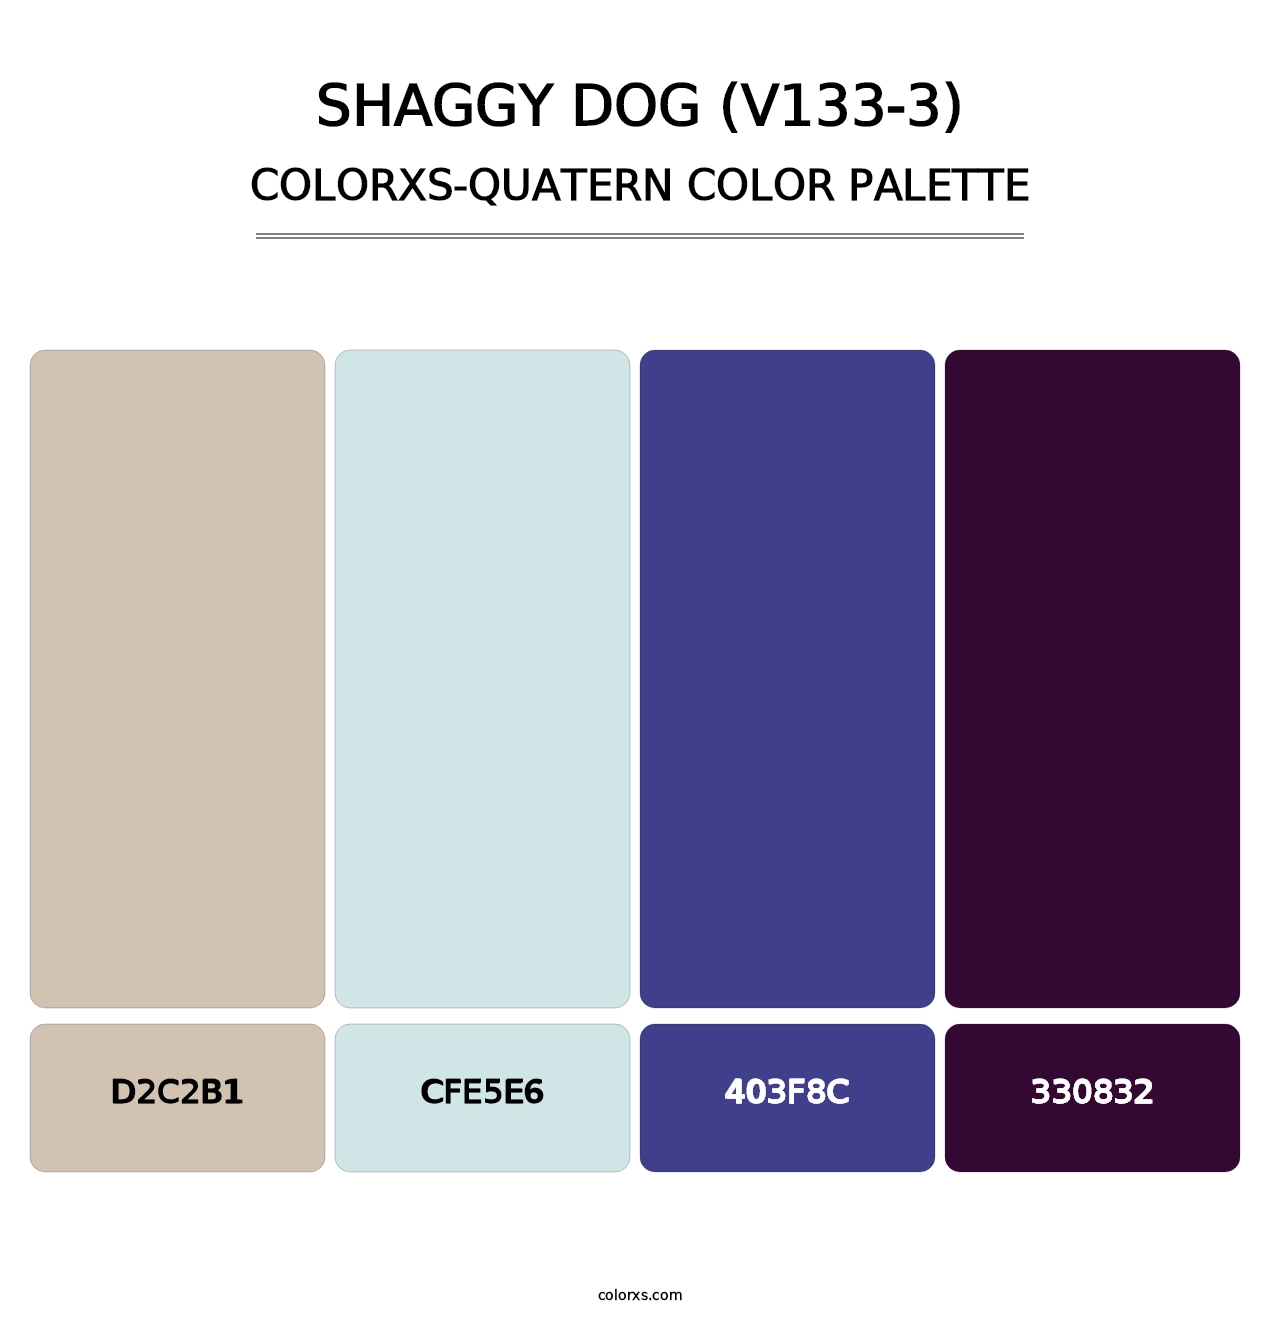 Shaggy Dog (V133-3) - Colorxs Quatern Palette